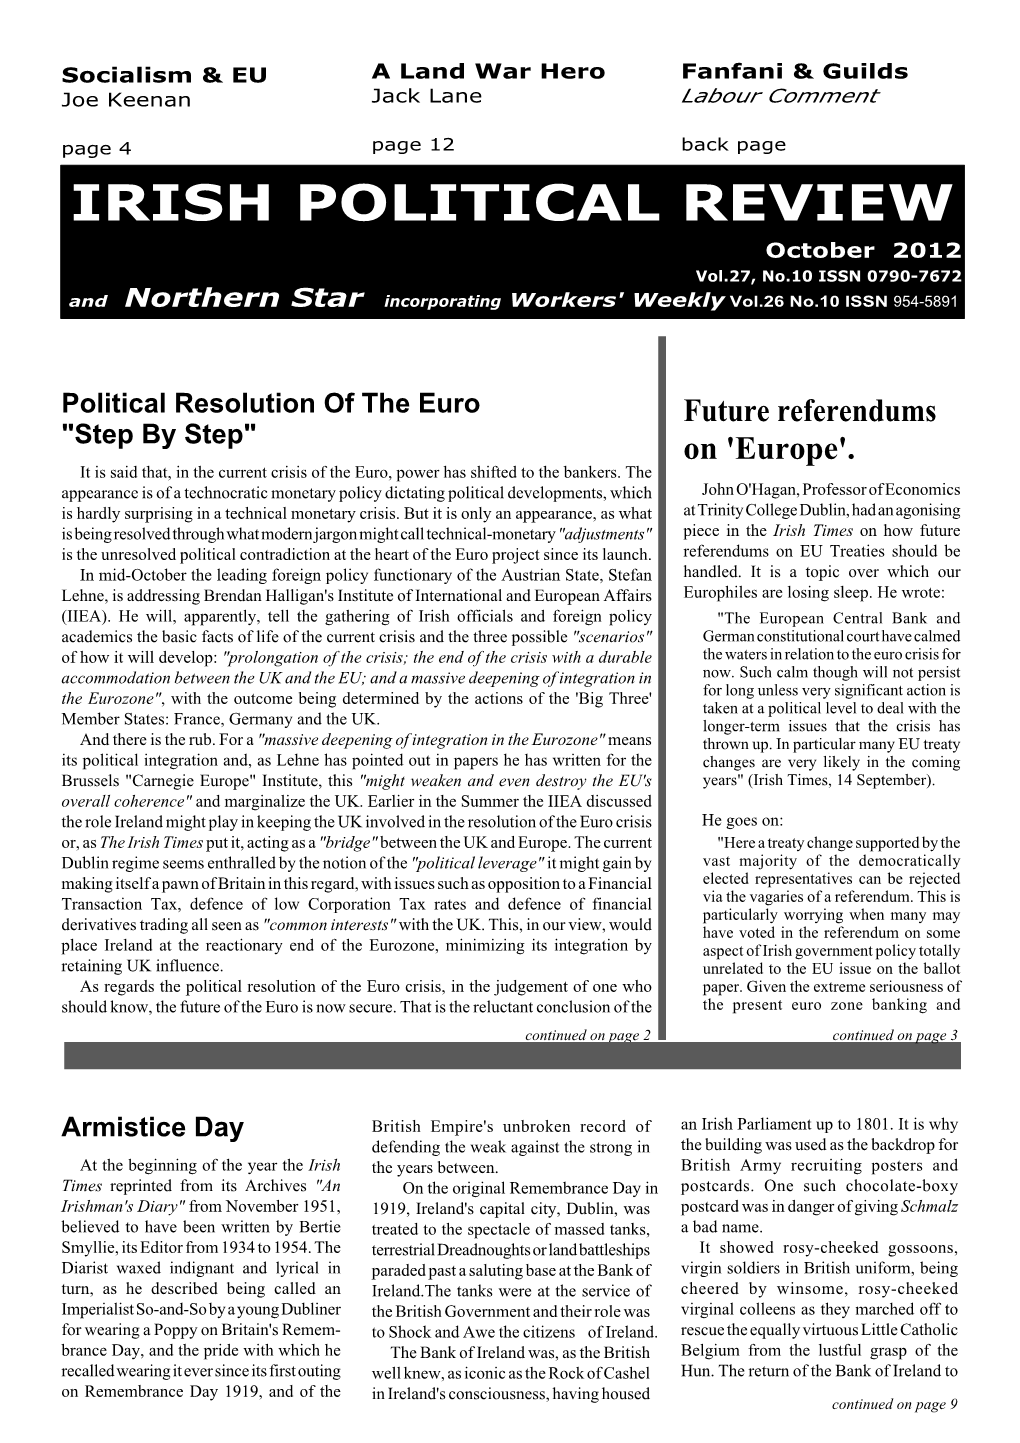 Irish Political Review, October 2012